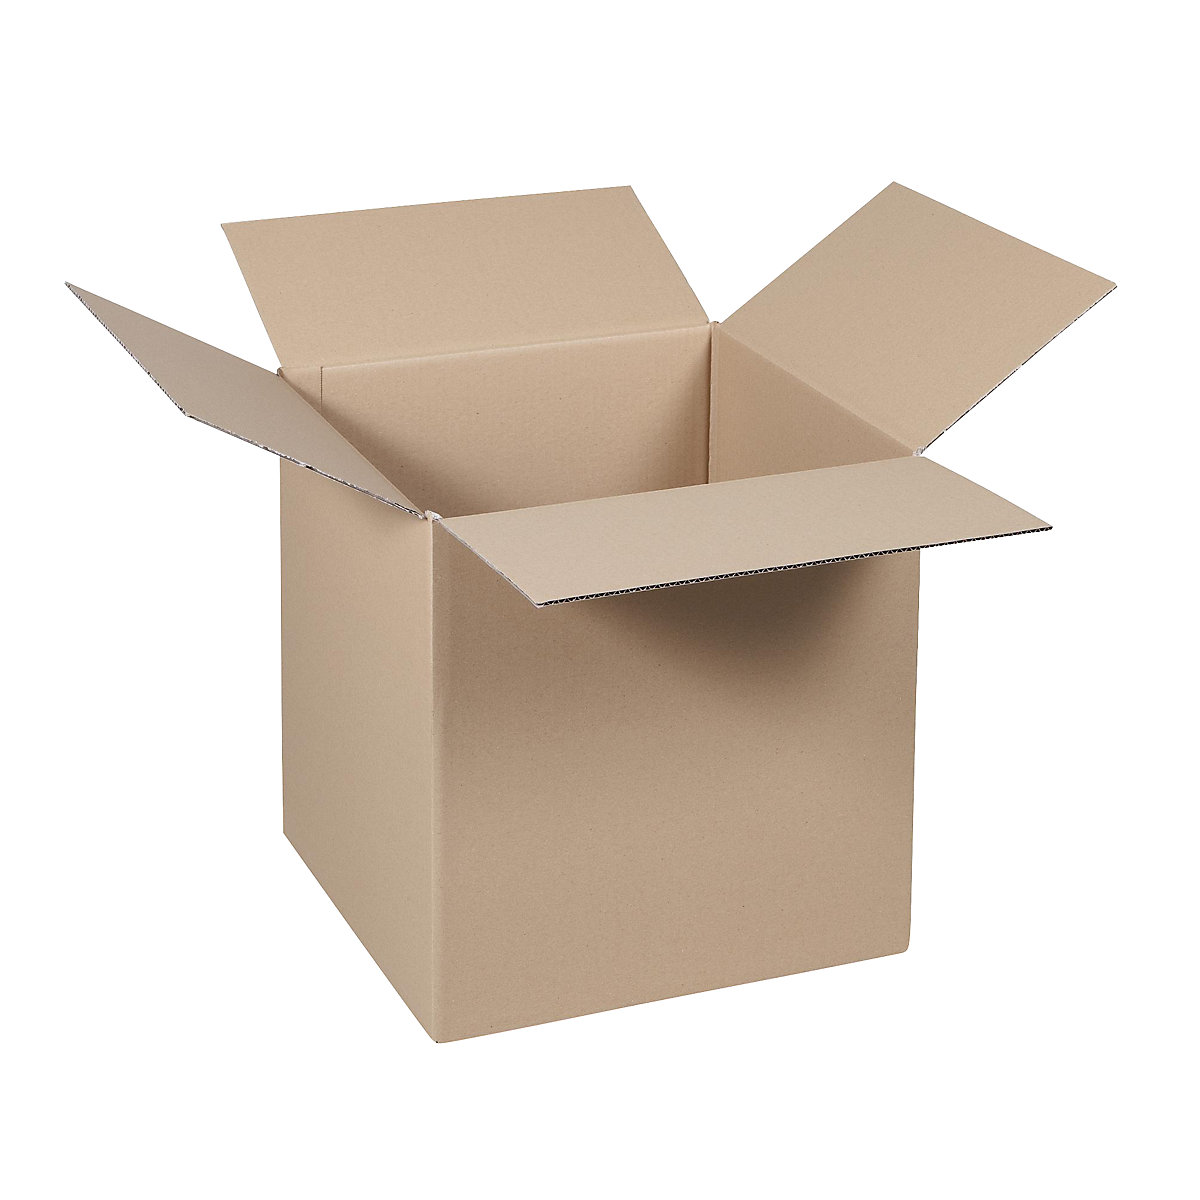 Folding cardboard box, FEFCO 0201, made of single fluted cardboard, internal dimensions 400 x 400 x 300 mm, pack of 50-21